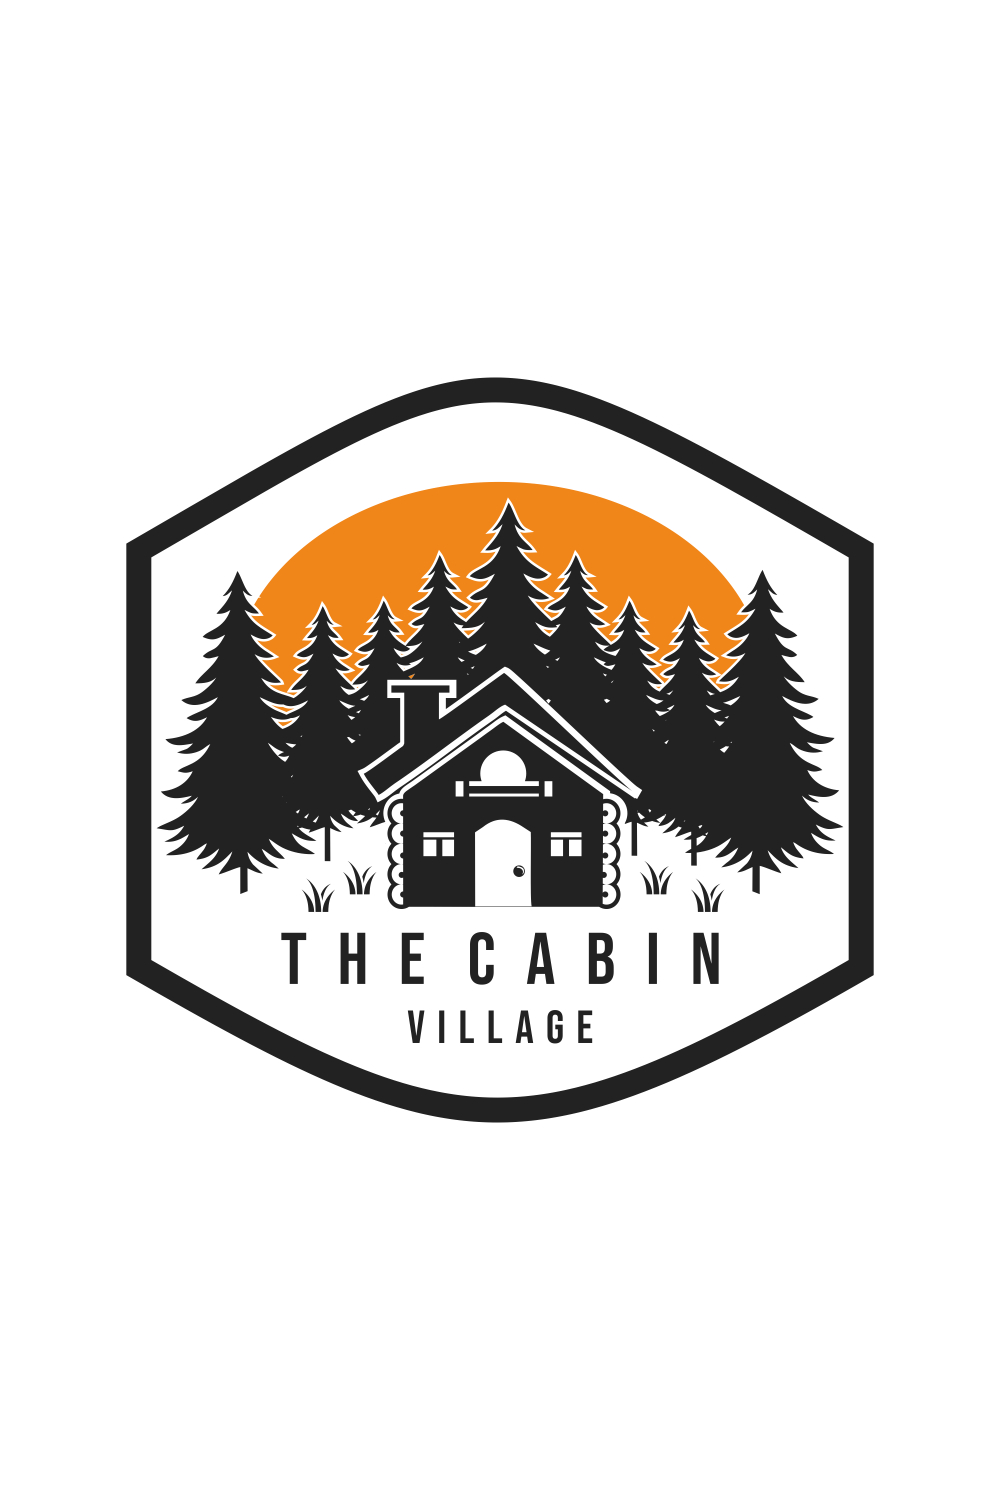 Cabin village logo vector lodge house illustration pinterest preview image.